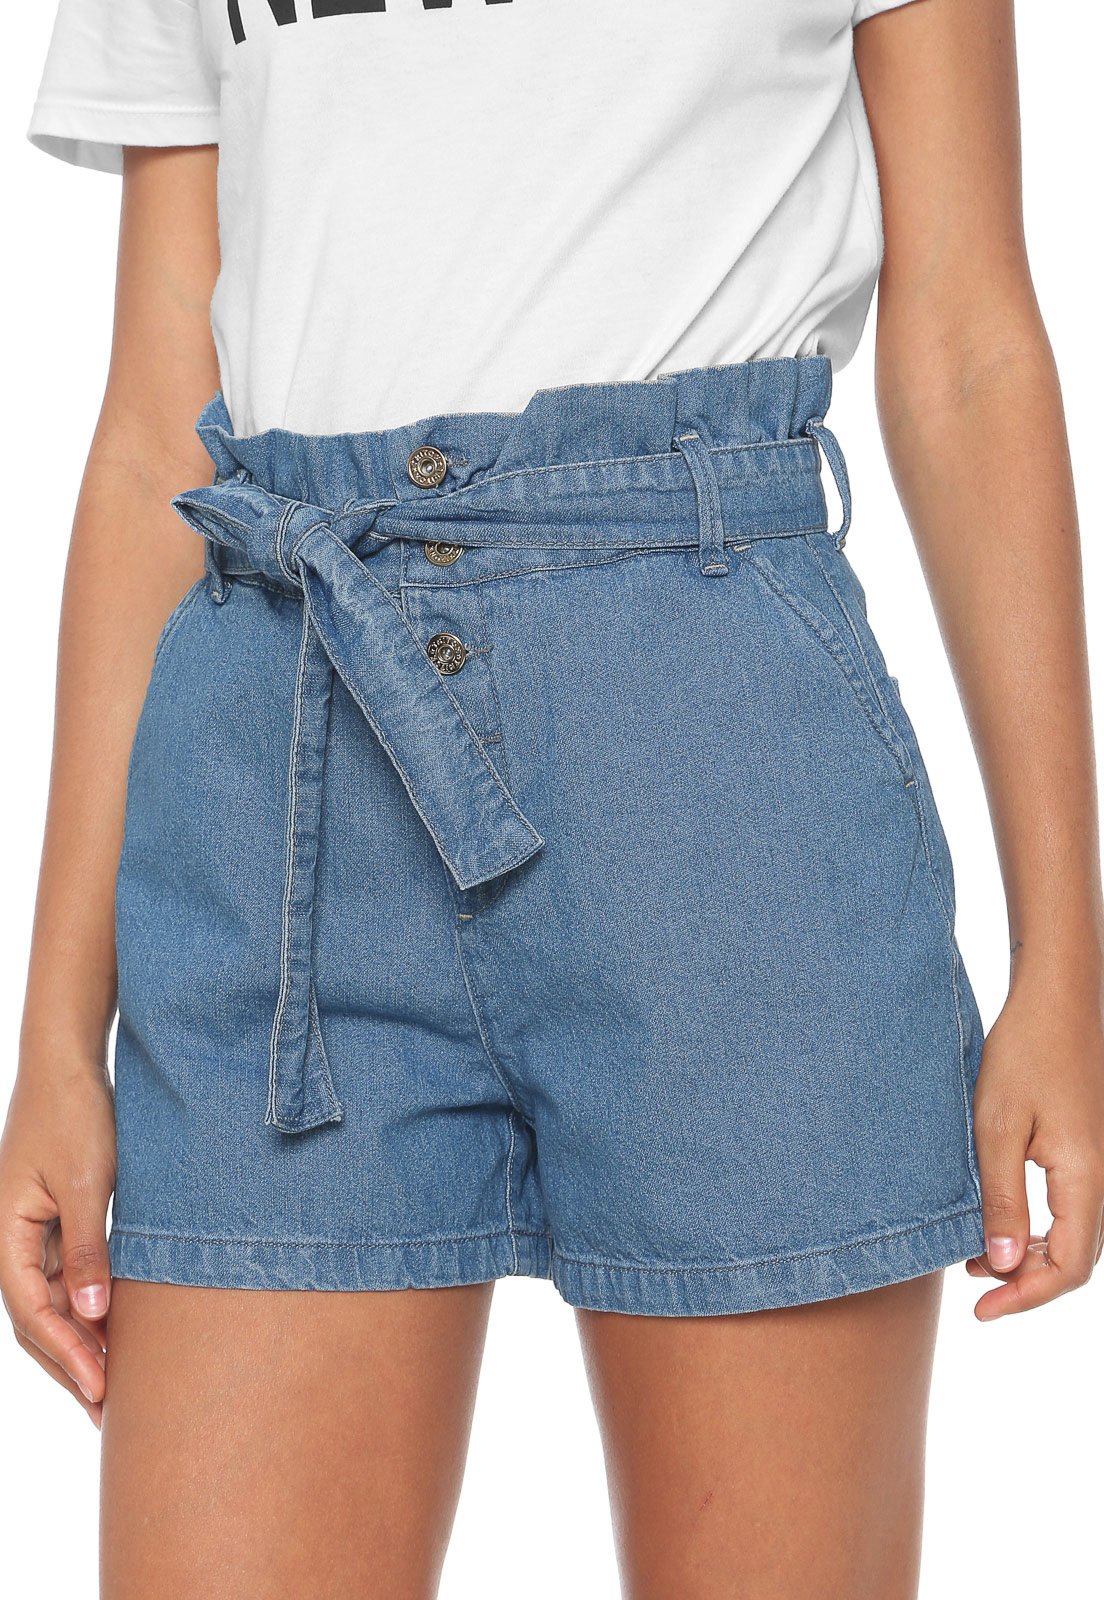 dafiti shorts jeans feminino